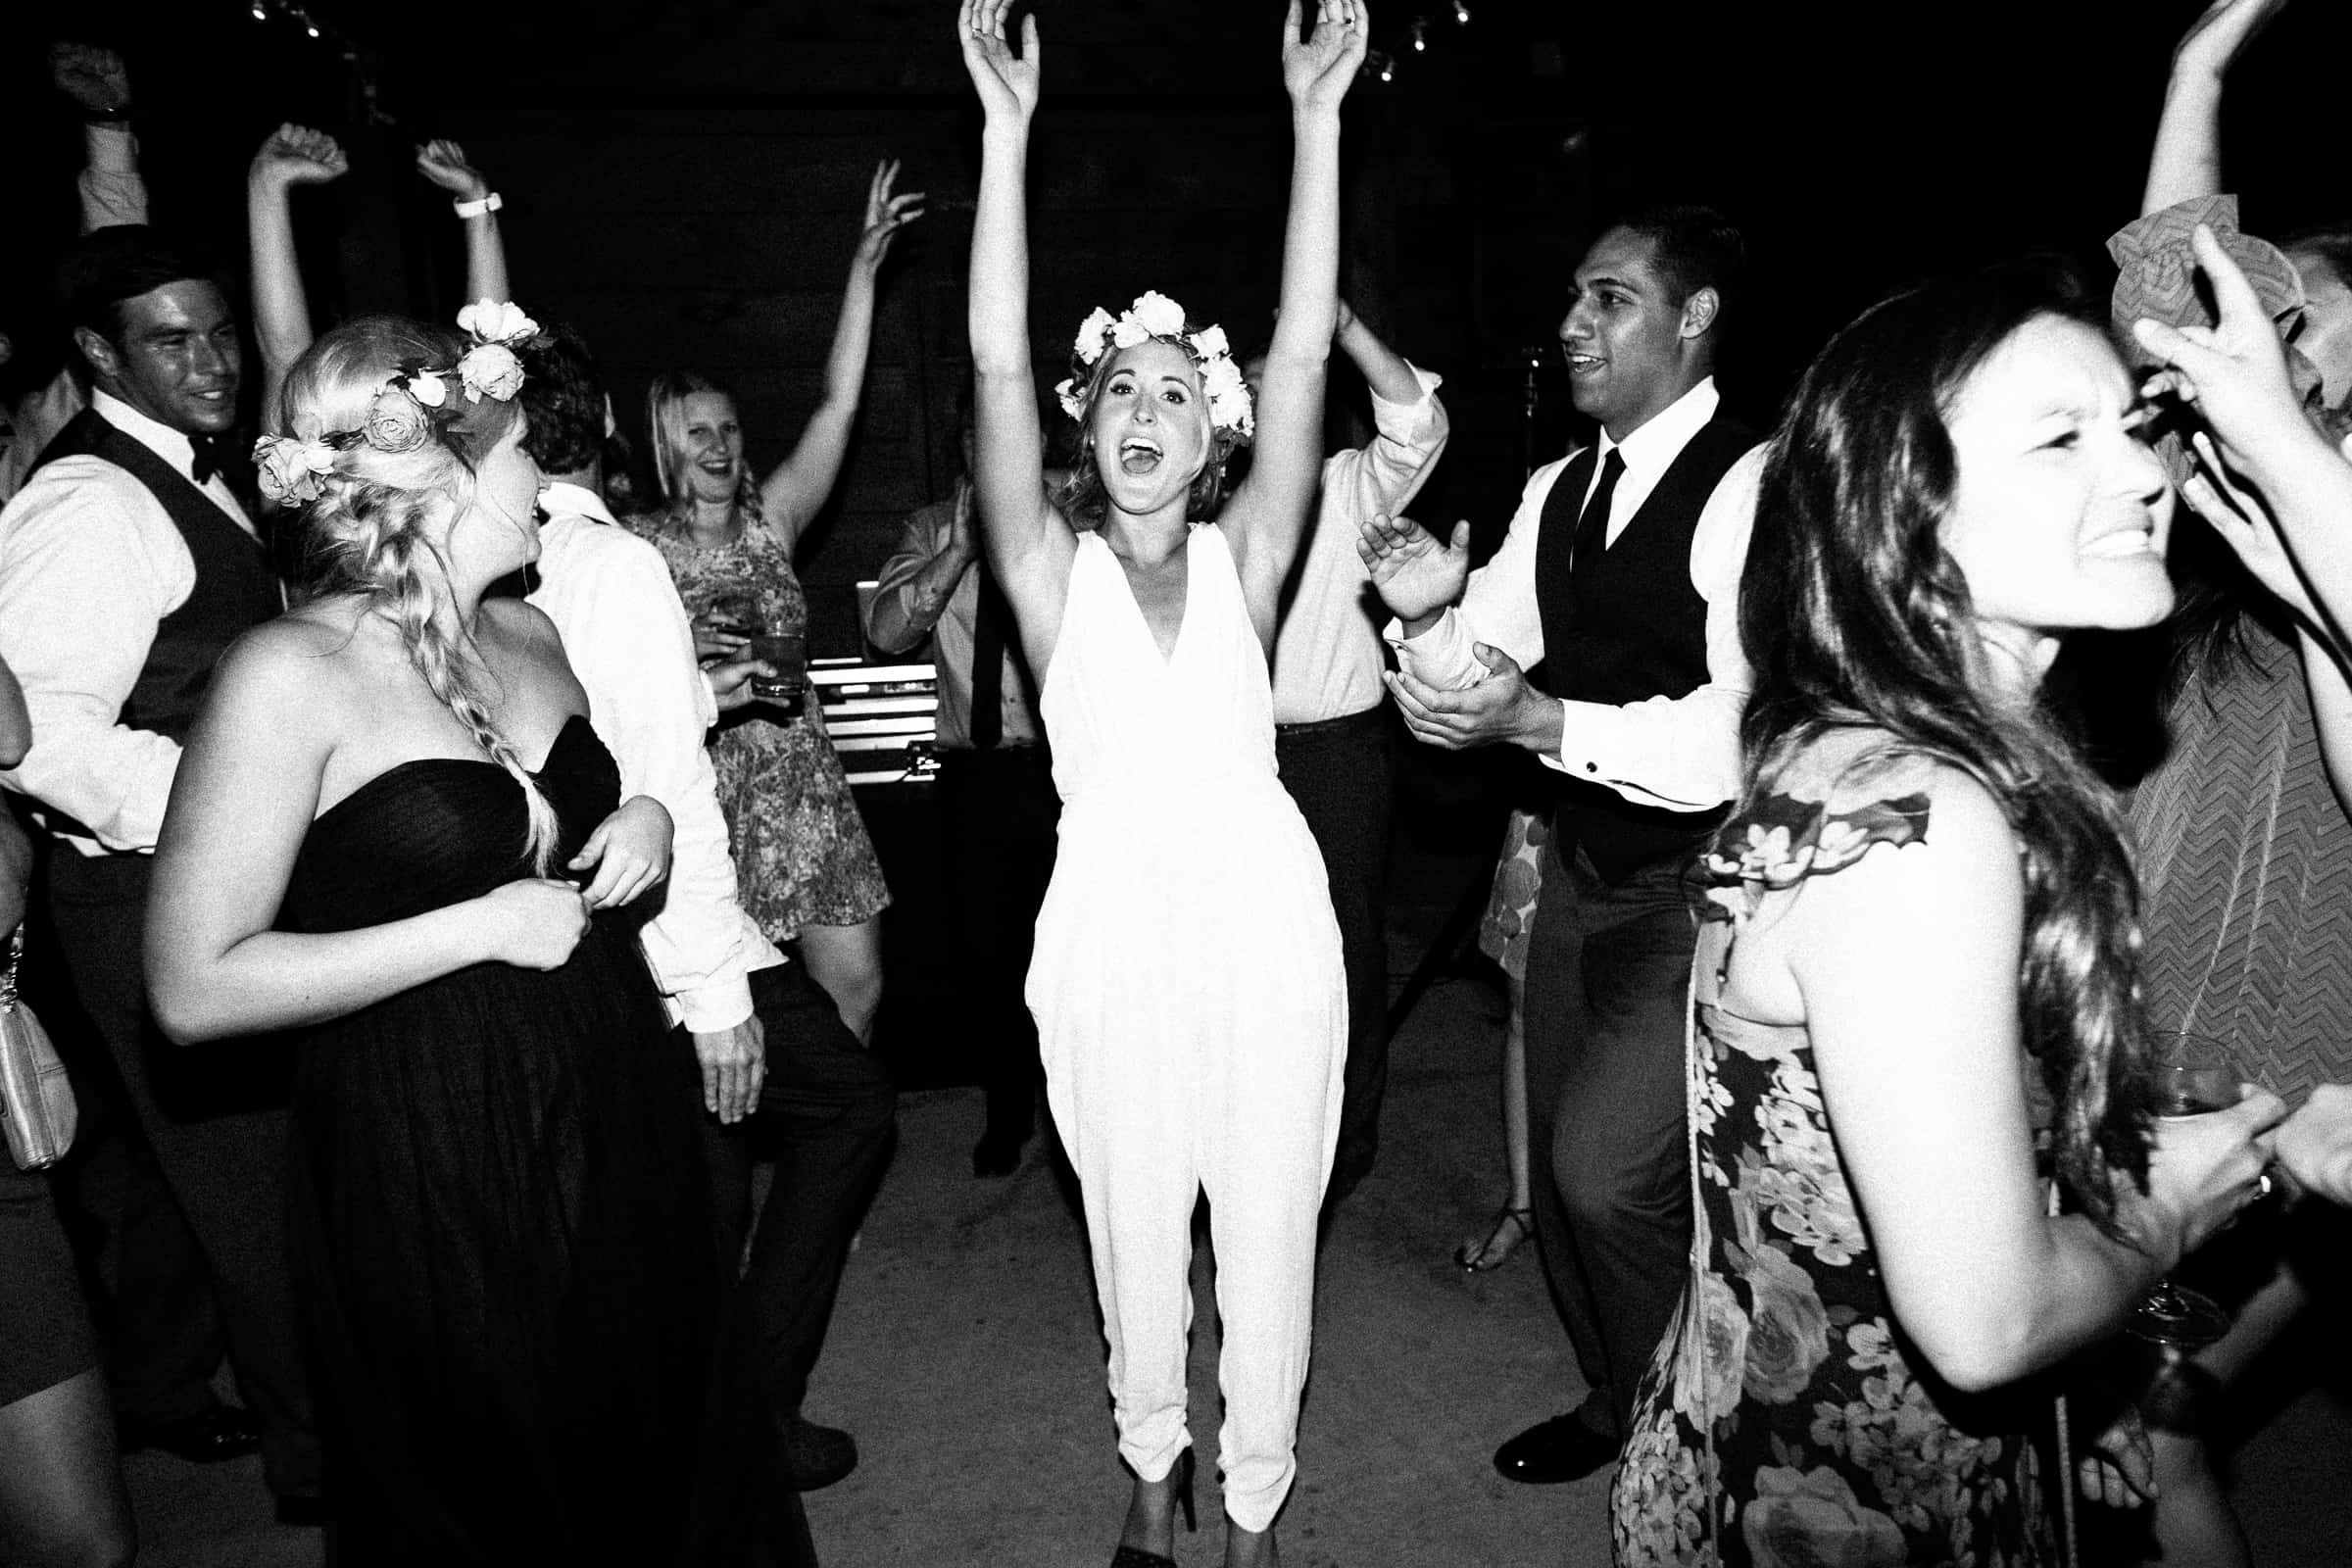 bride waving hands in the air dancing